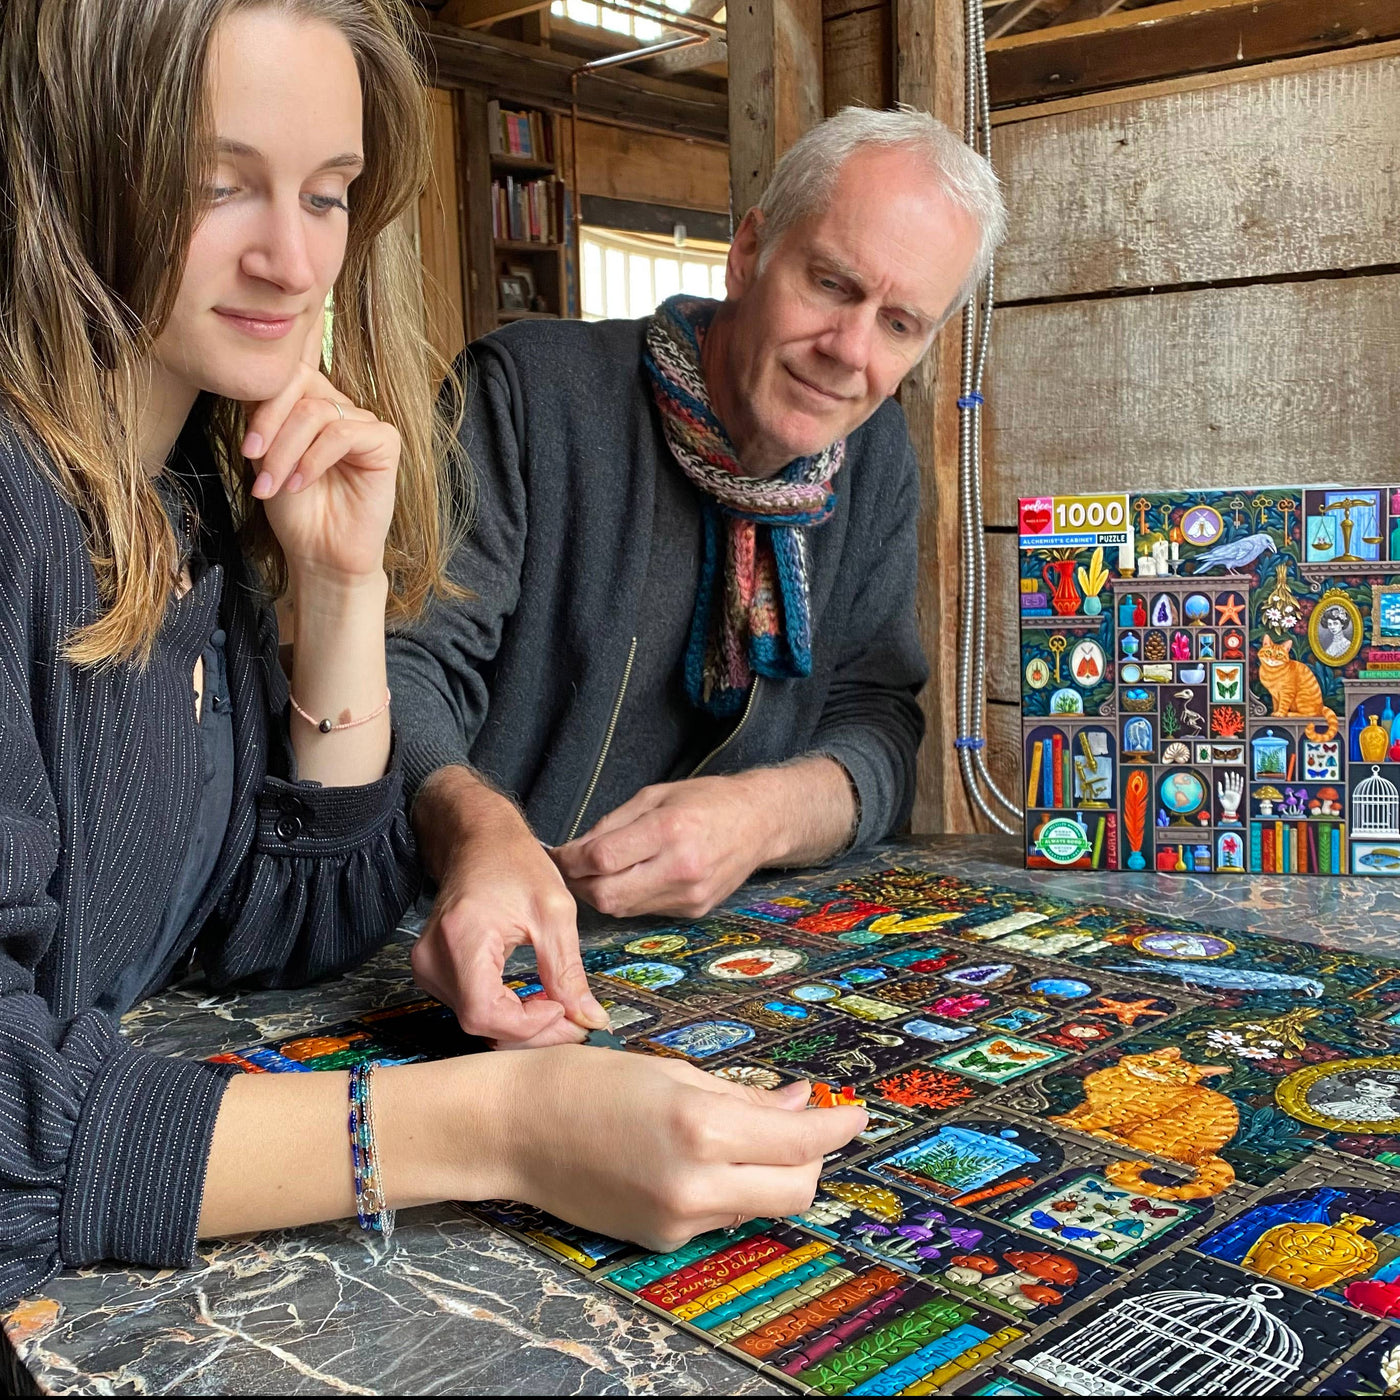 Alchemist's Cabinet | 1,000 Piece Jigsaw Puzzle